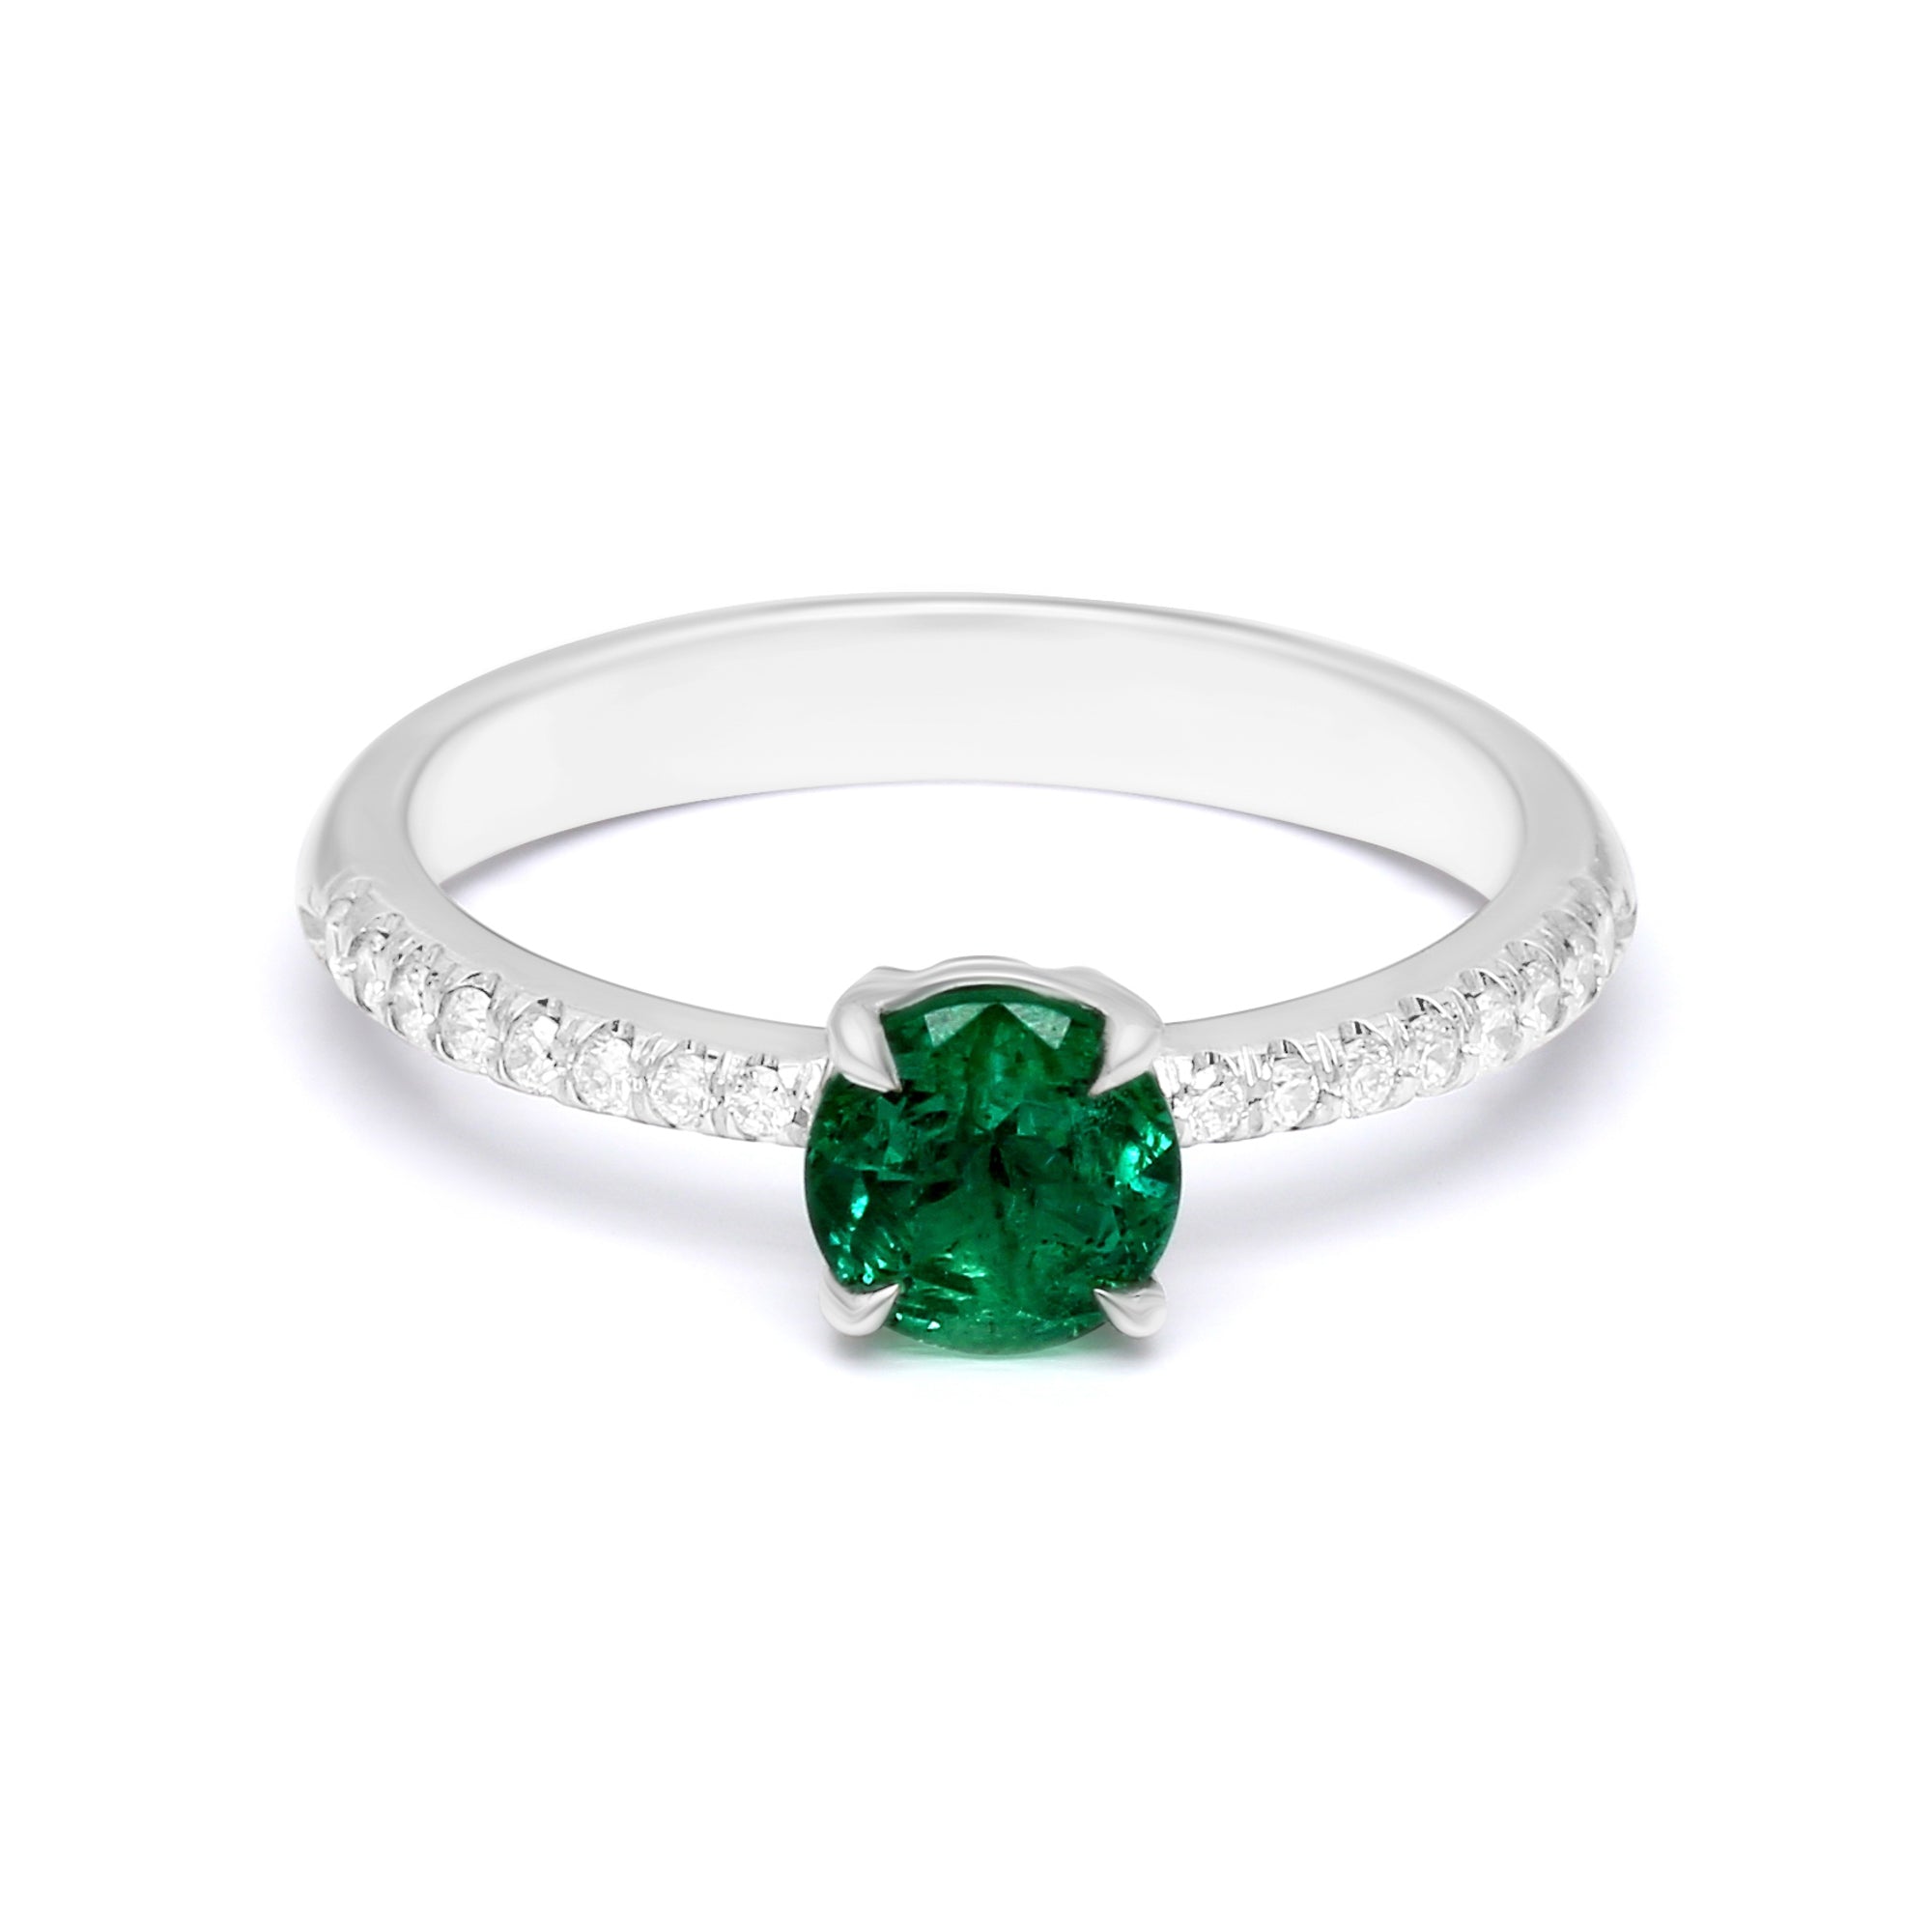 Emerald Round with Diamonds Ring - 0.86ct TW